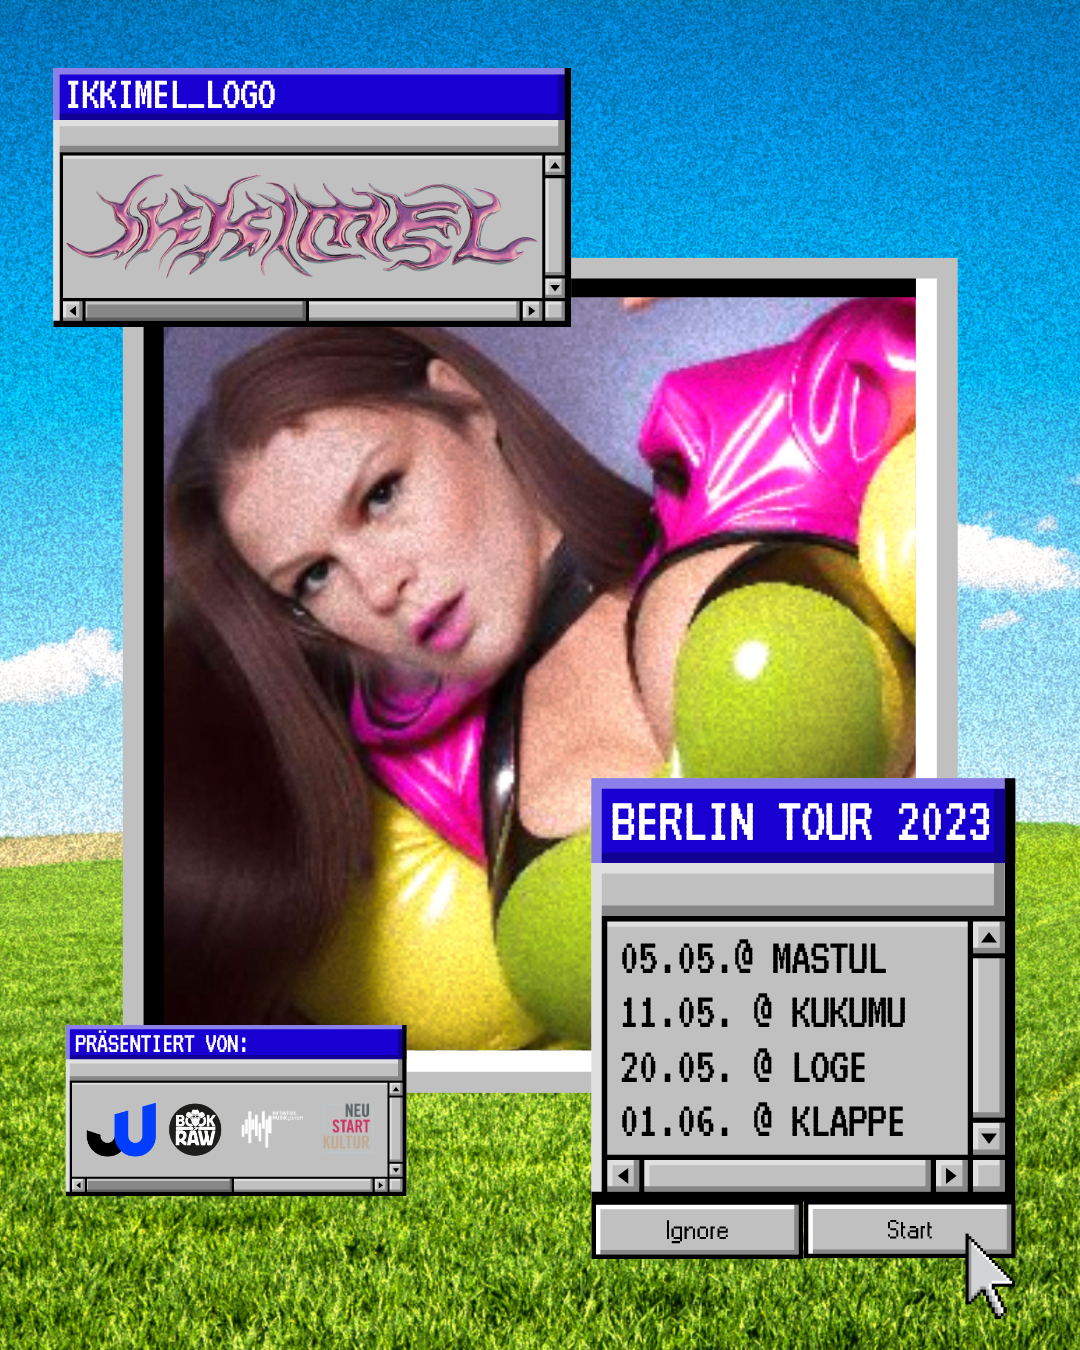 Ikkimel - EP Release & Berlin Tour 2023